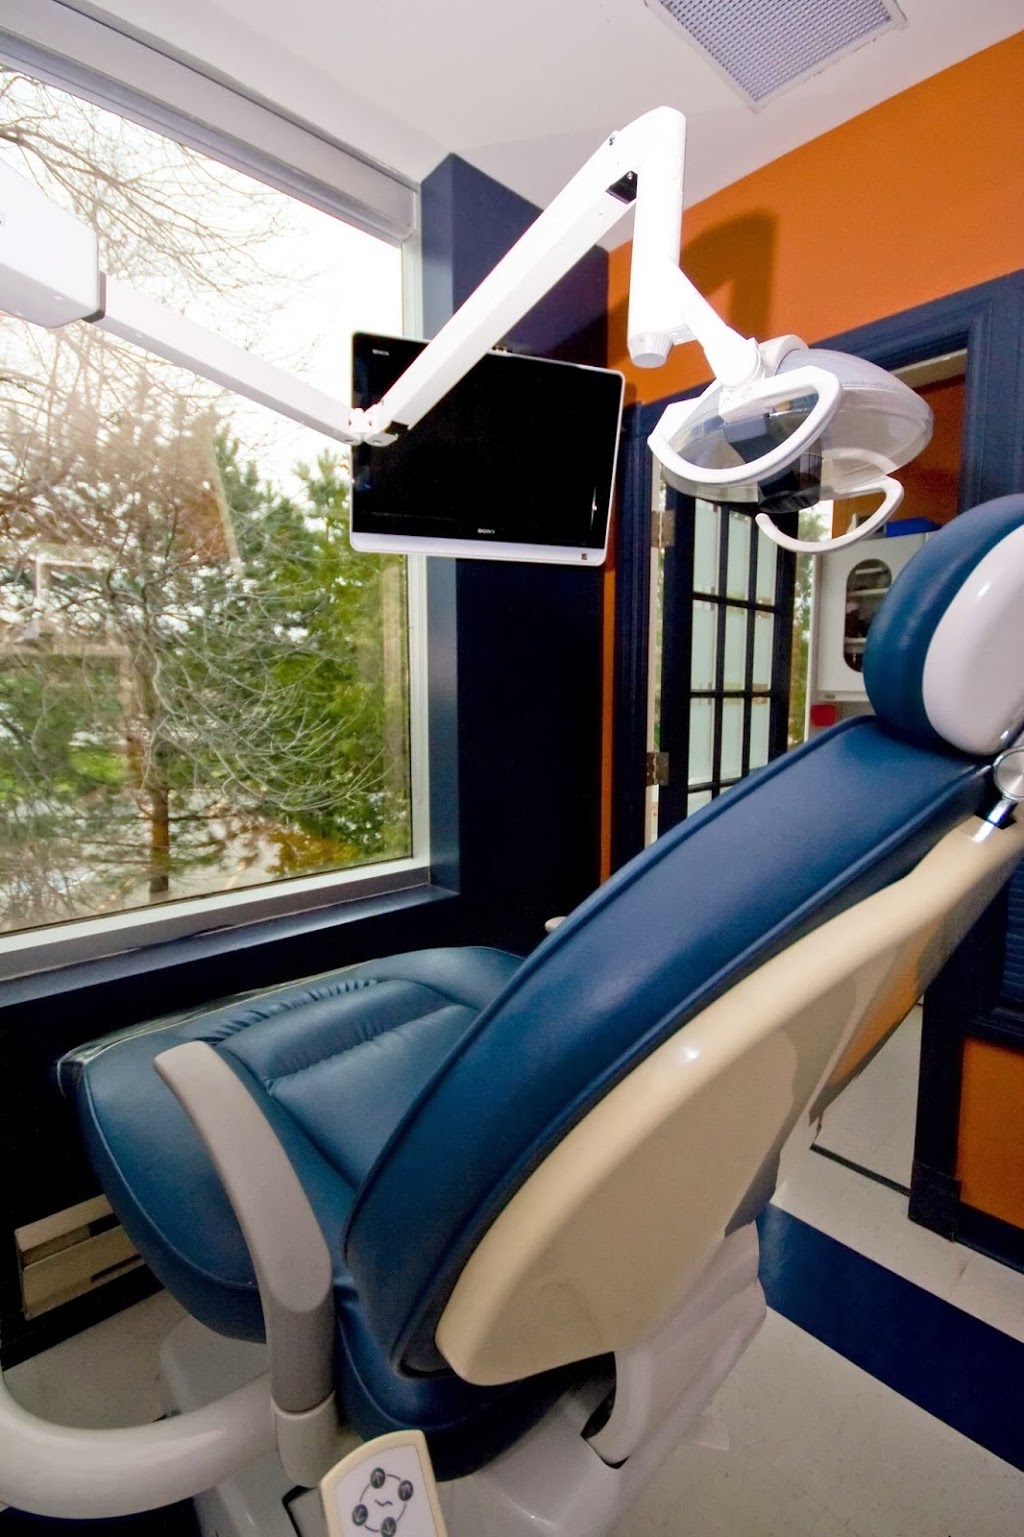 Terry Fox Dental Centre | 600 Terry Fox Dr, Kanata, ON K2L 4B6, Canada | Phone: (613) 599-8555